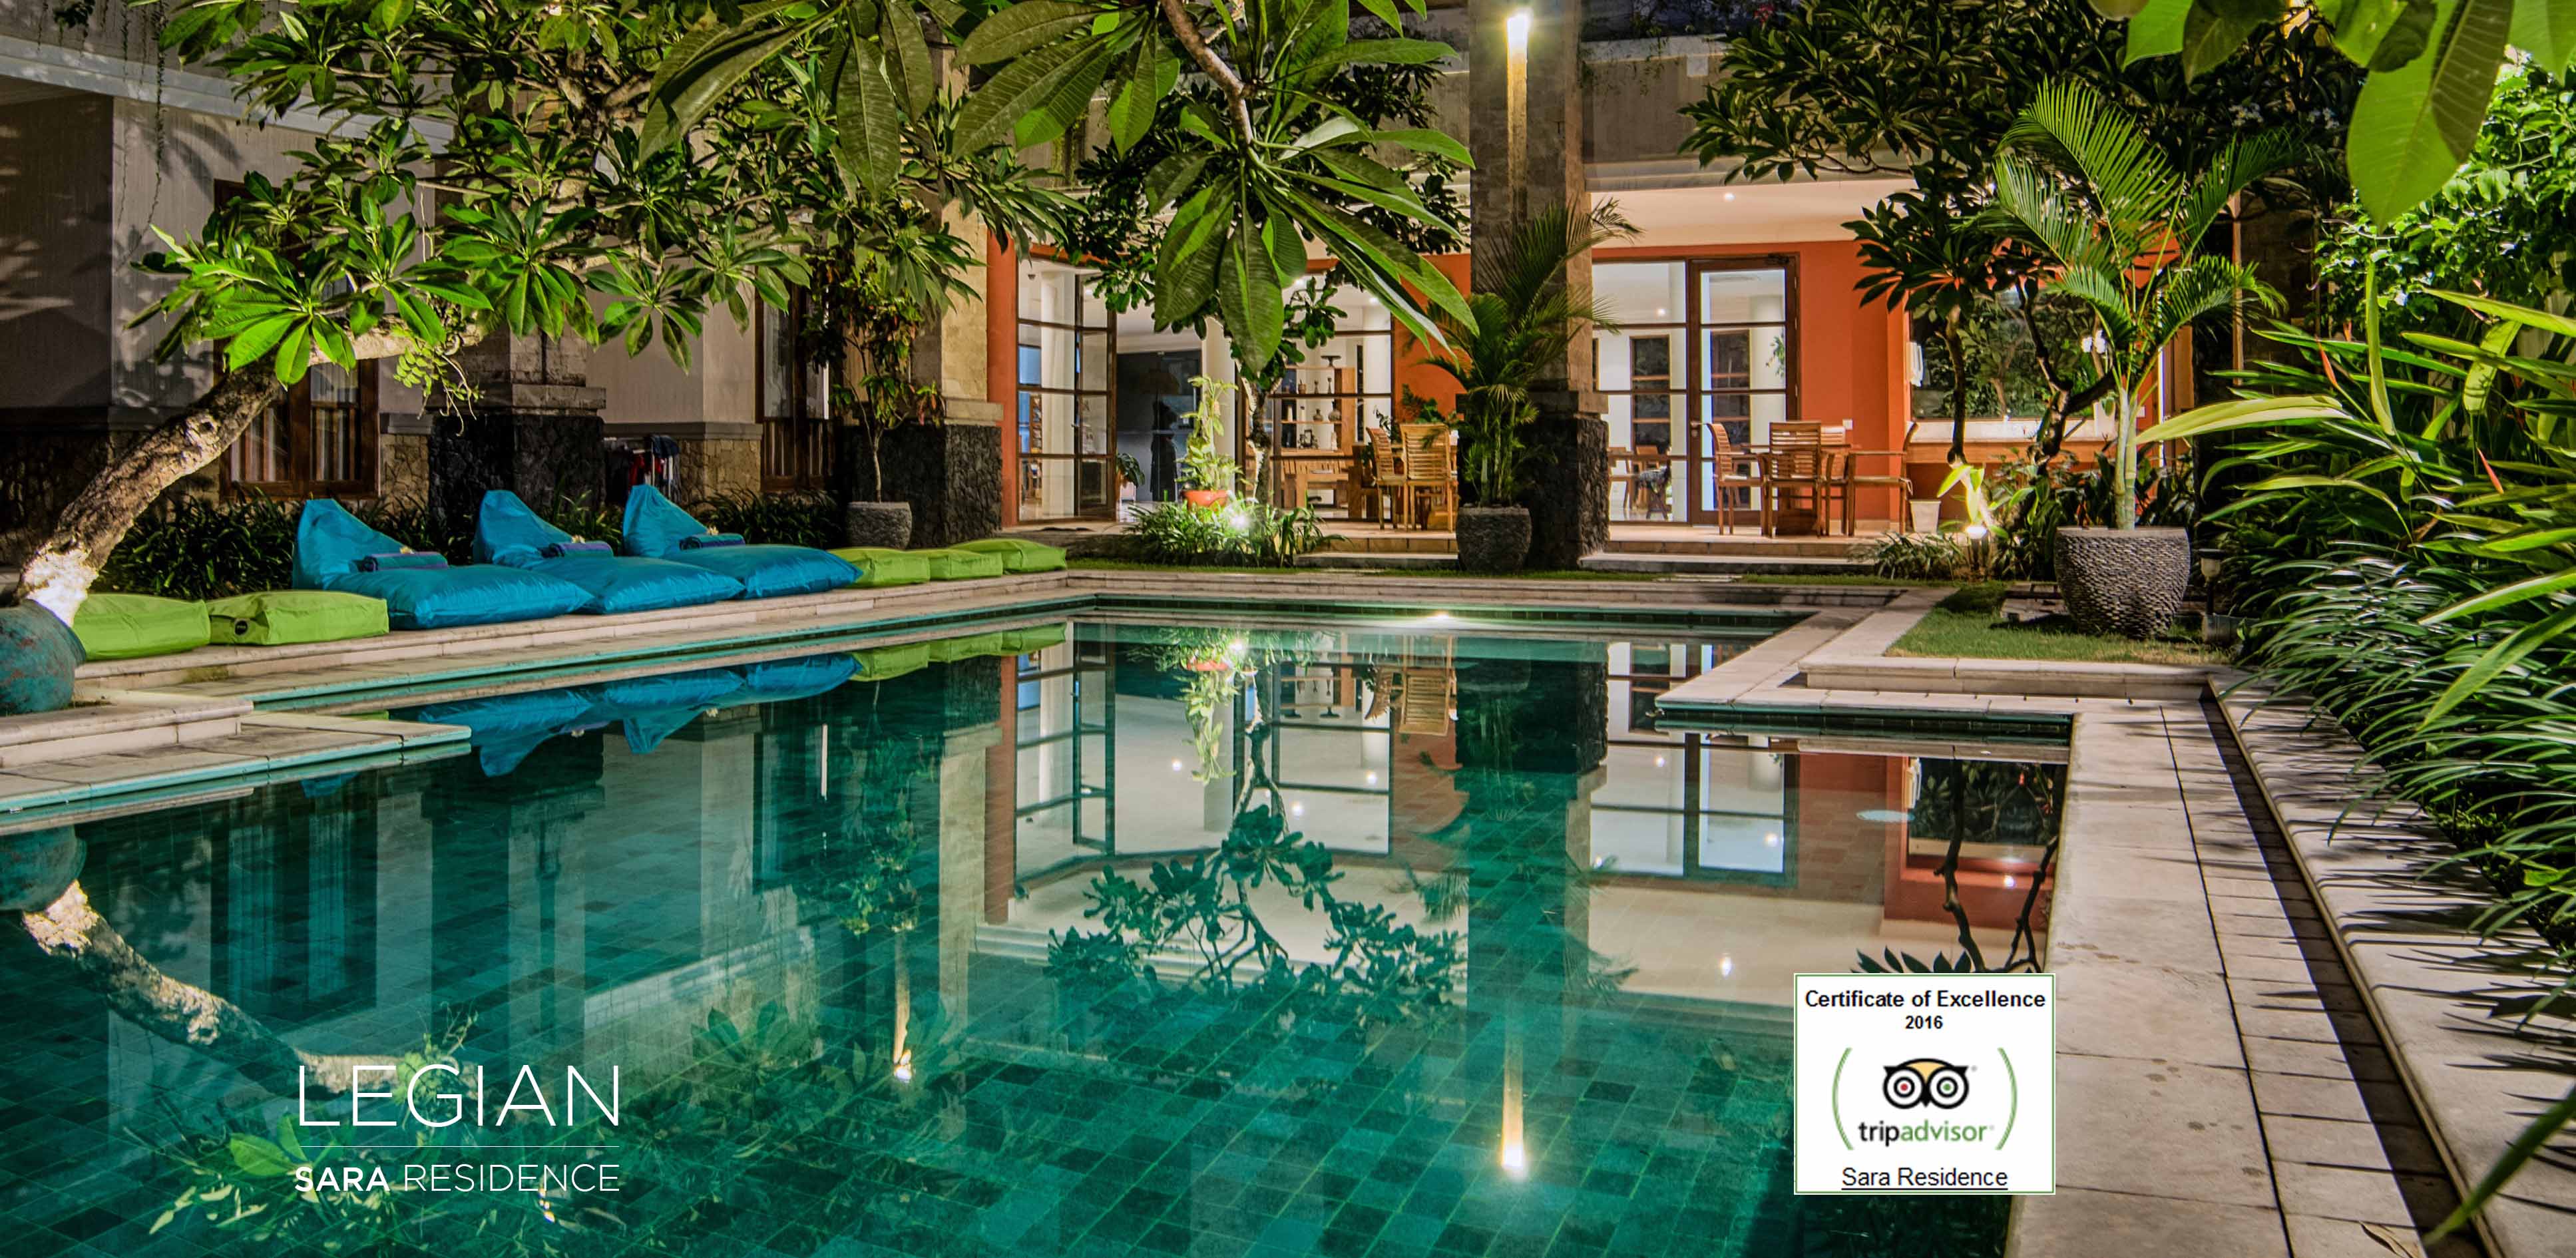 Sara Residence - Official Hotel Website - Bali Expat Apartment in Legian